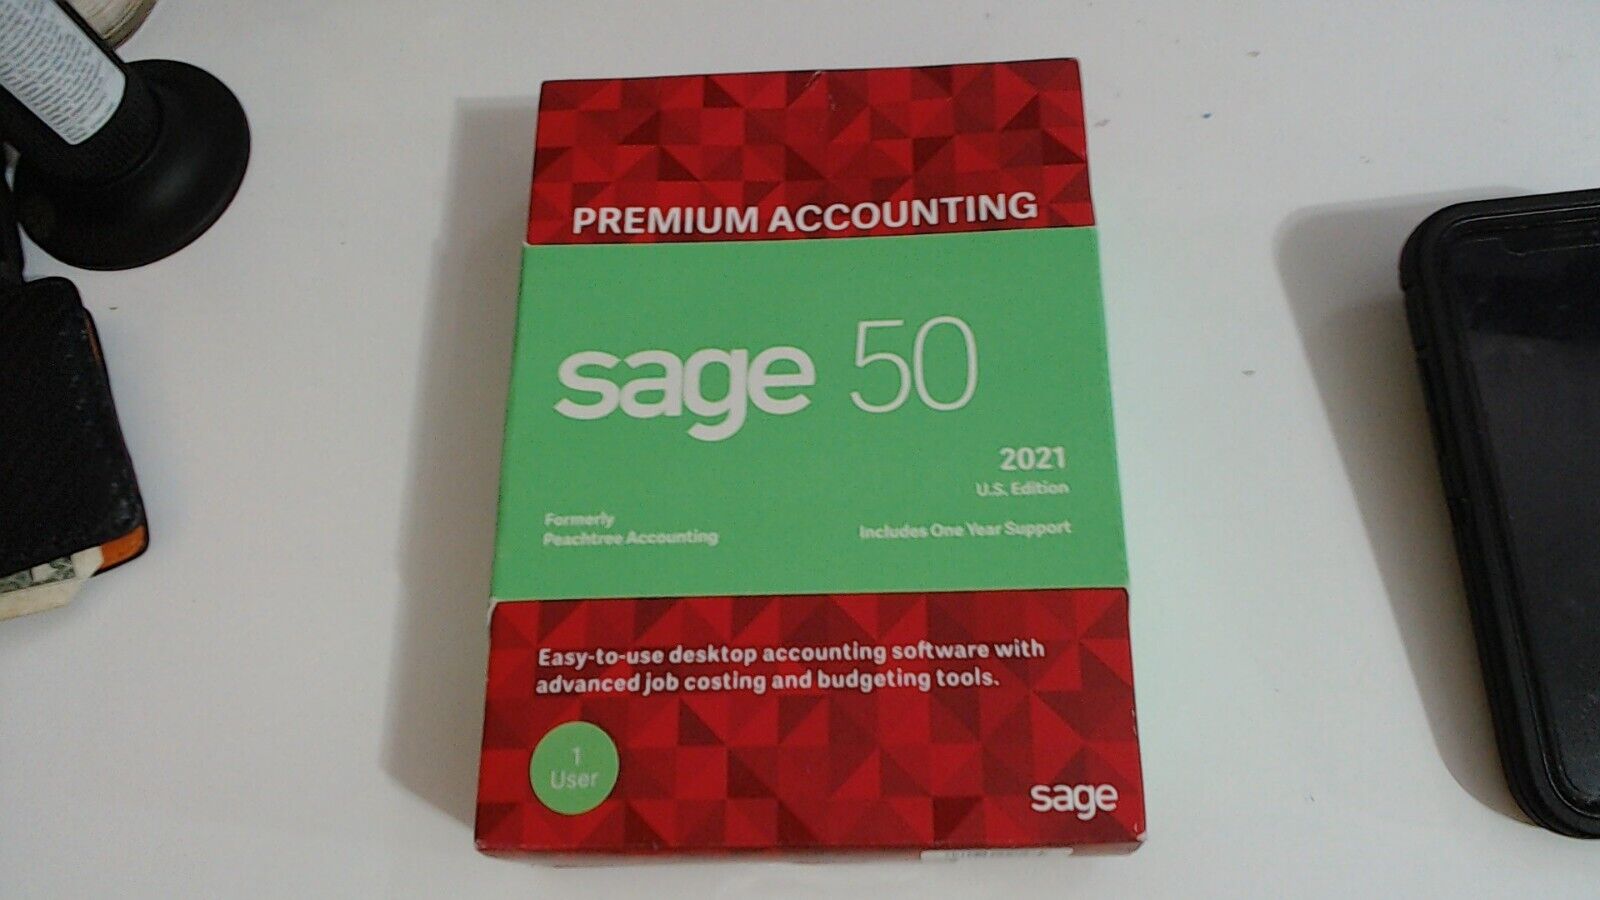 Sage 50 Premium Accounting 2021 For Windows (1 User)